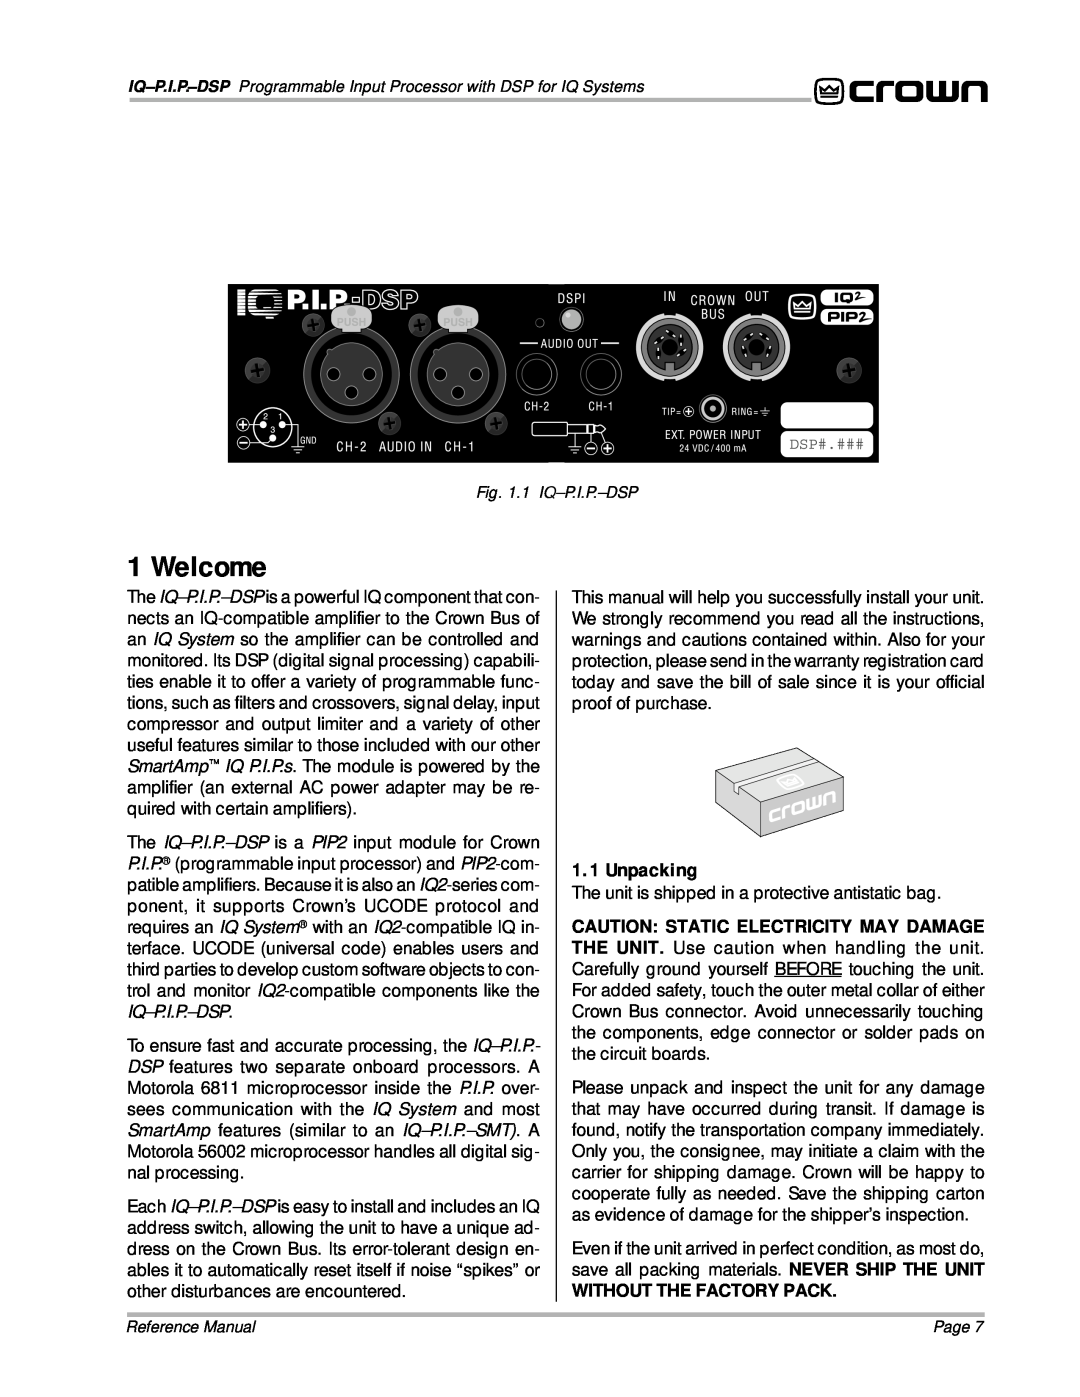 Crown Audio IQ P.I.P.-DSP manual Welcome, Unpacking 